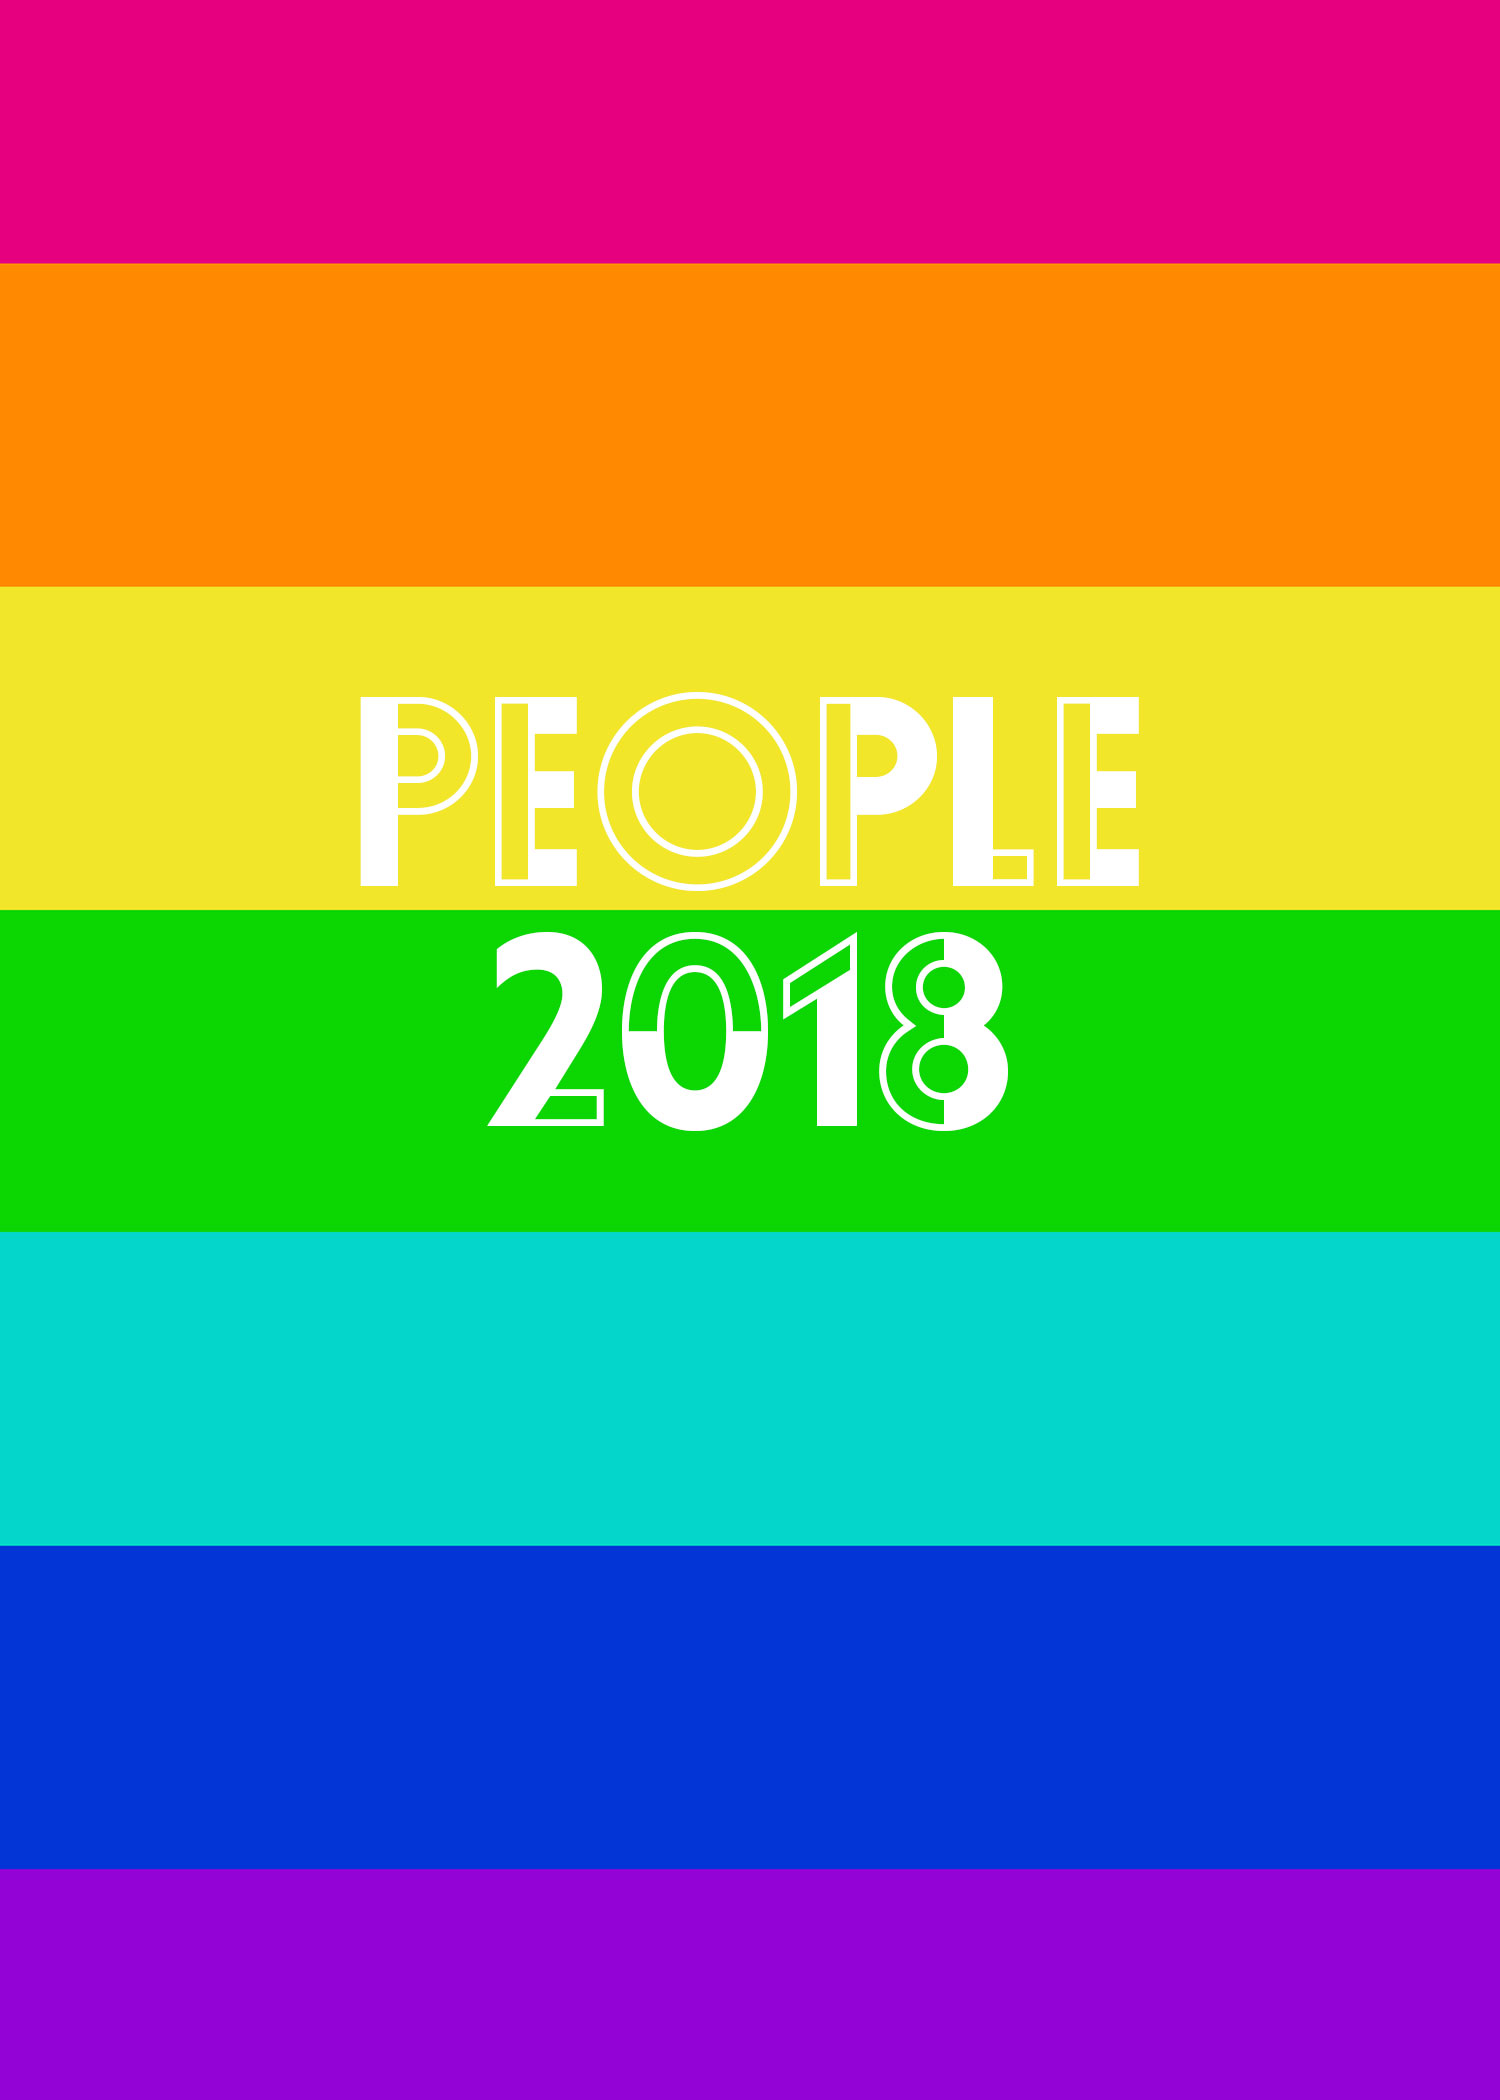 PEOPLE Festival 2018